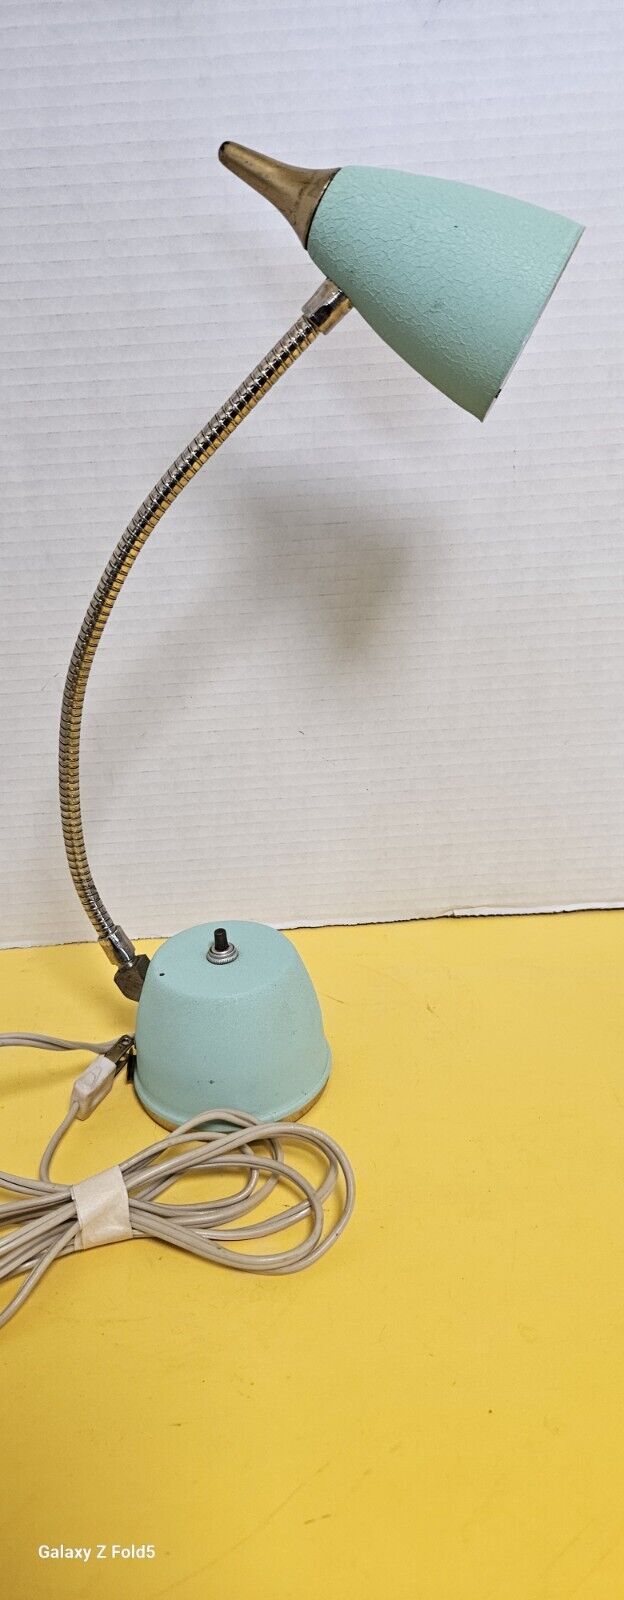 Vintage 1950s-60s Beautiful Turquoise Portable Desktop Gooseneck Lamp. Great...